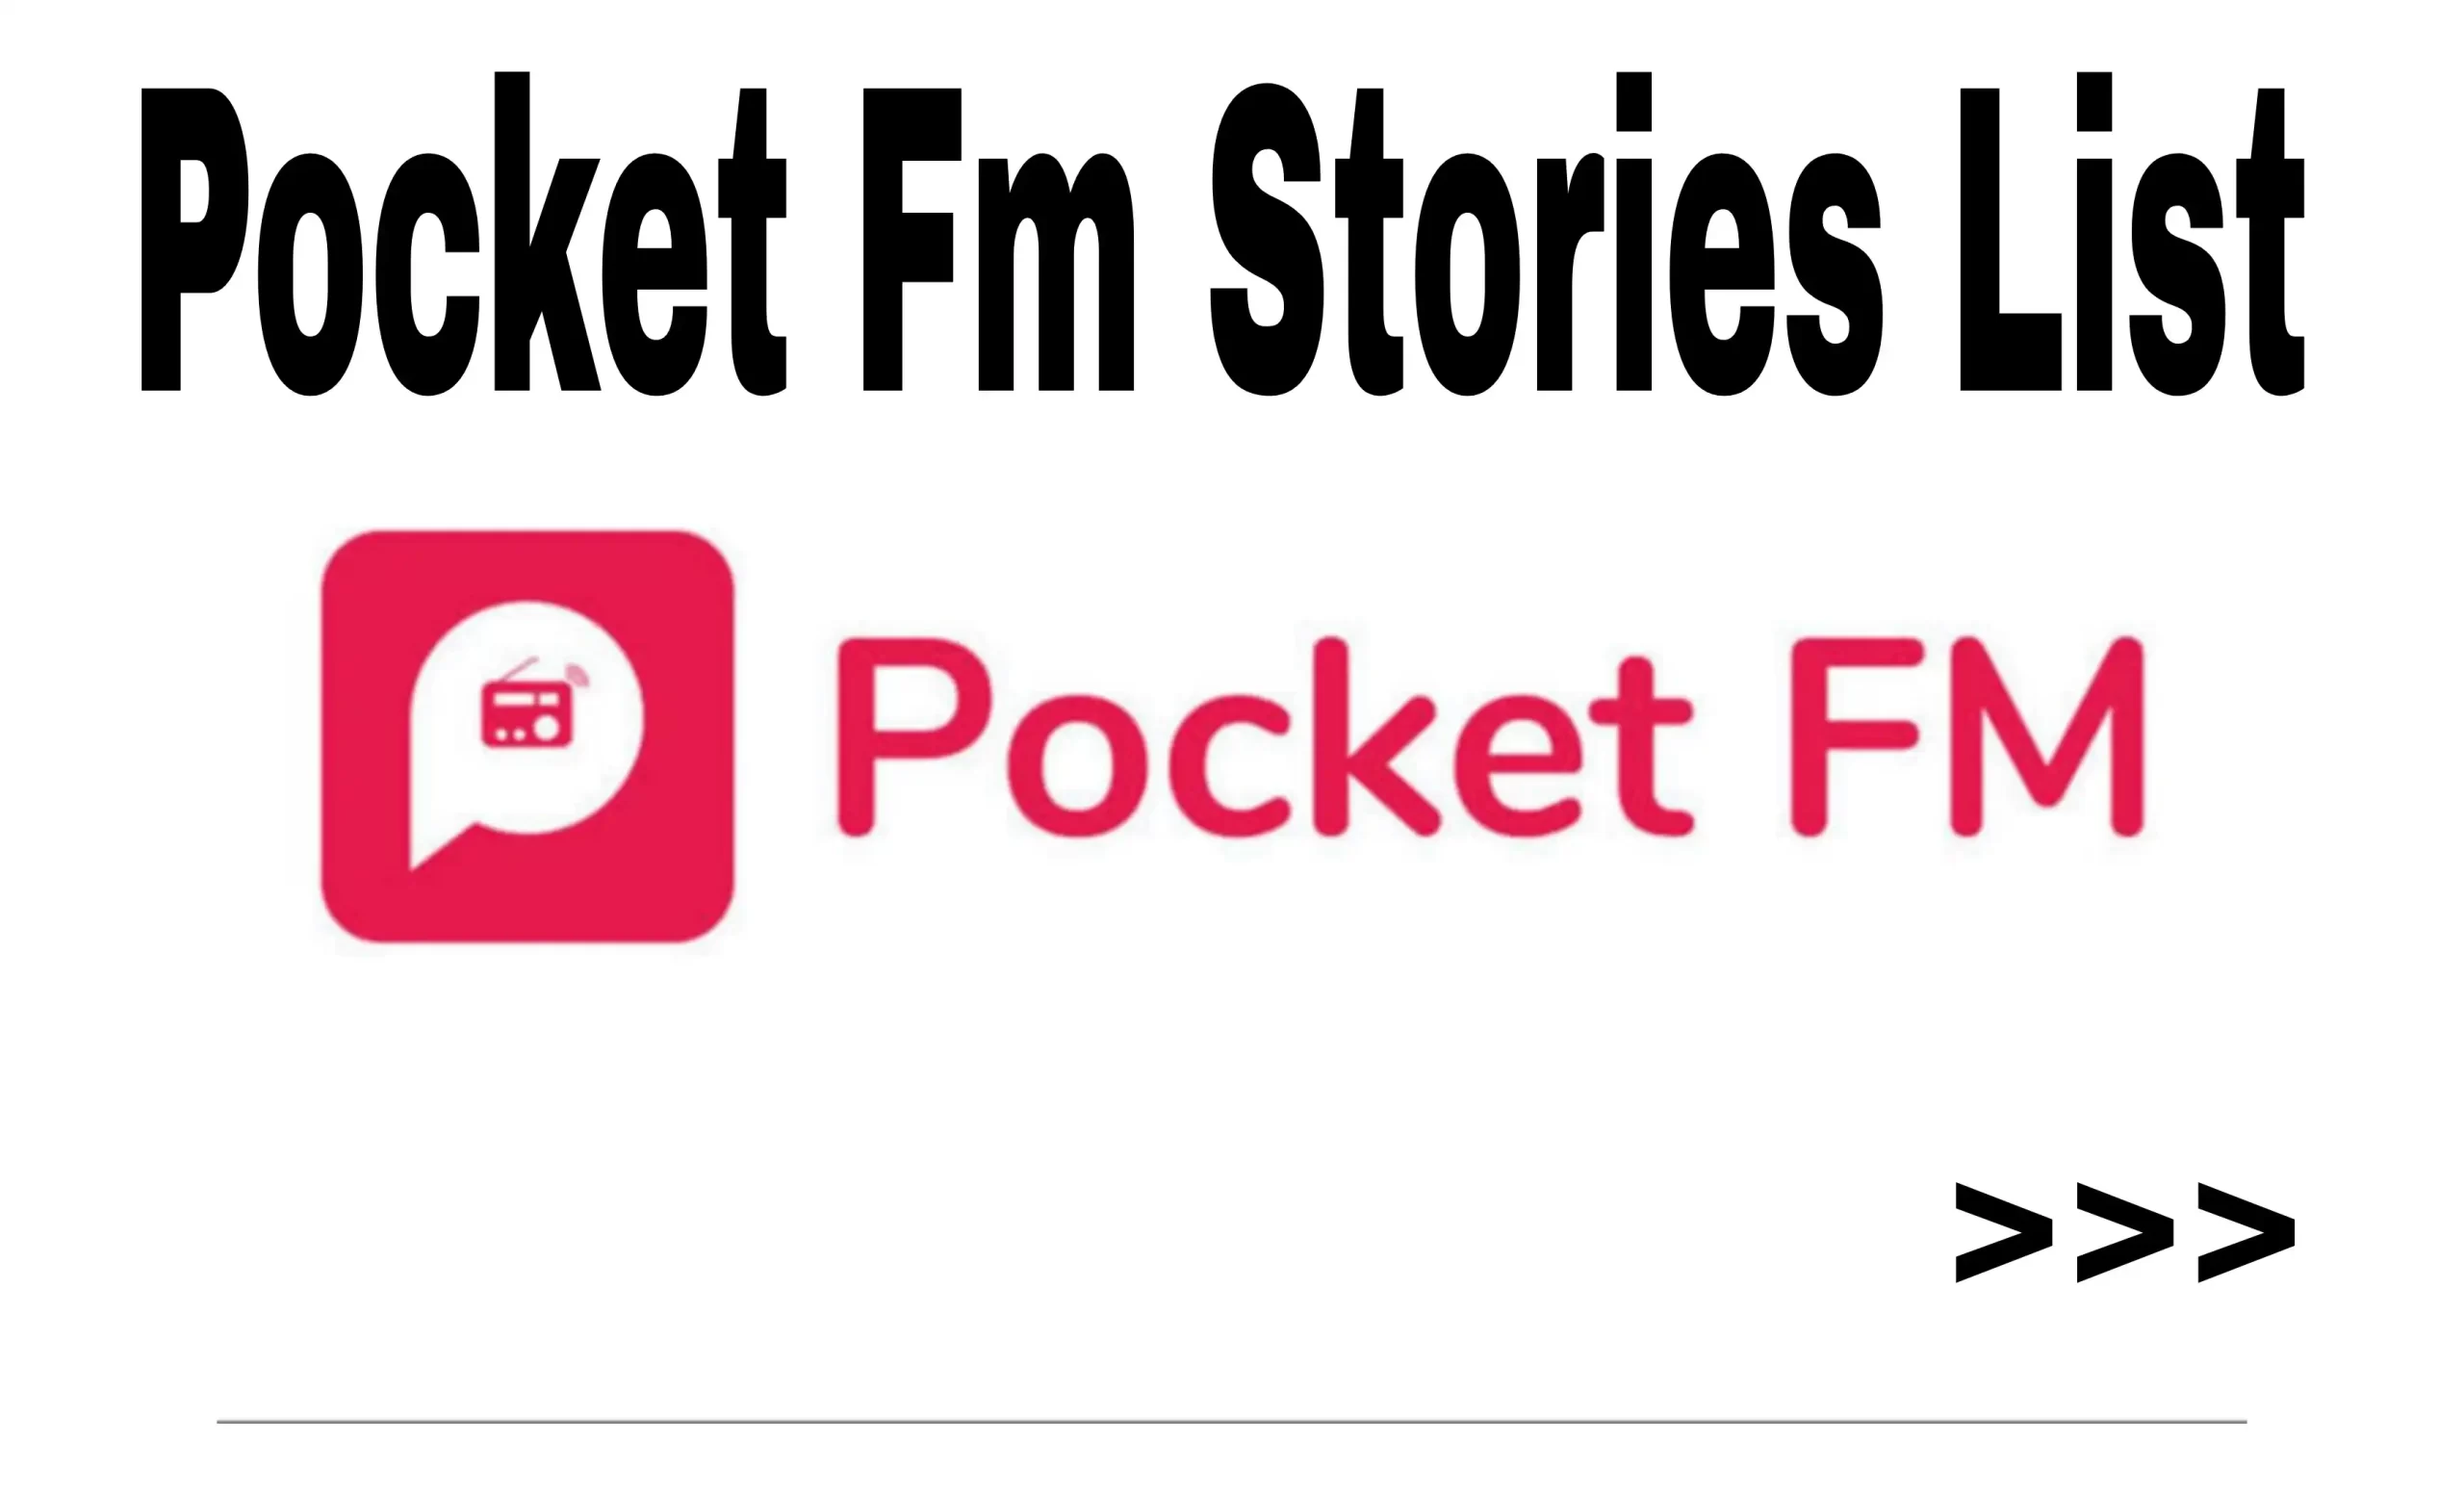 Pocket Fm Stories List